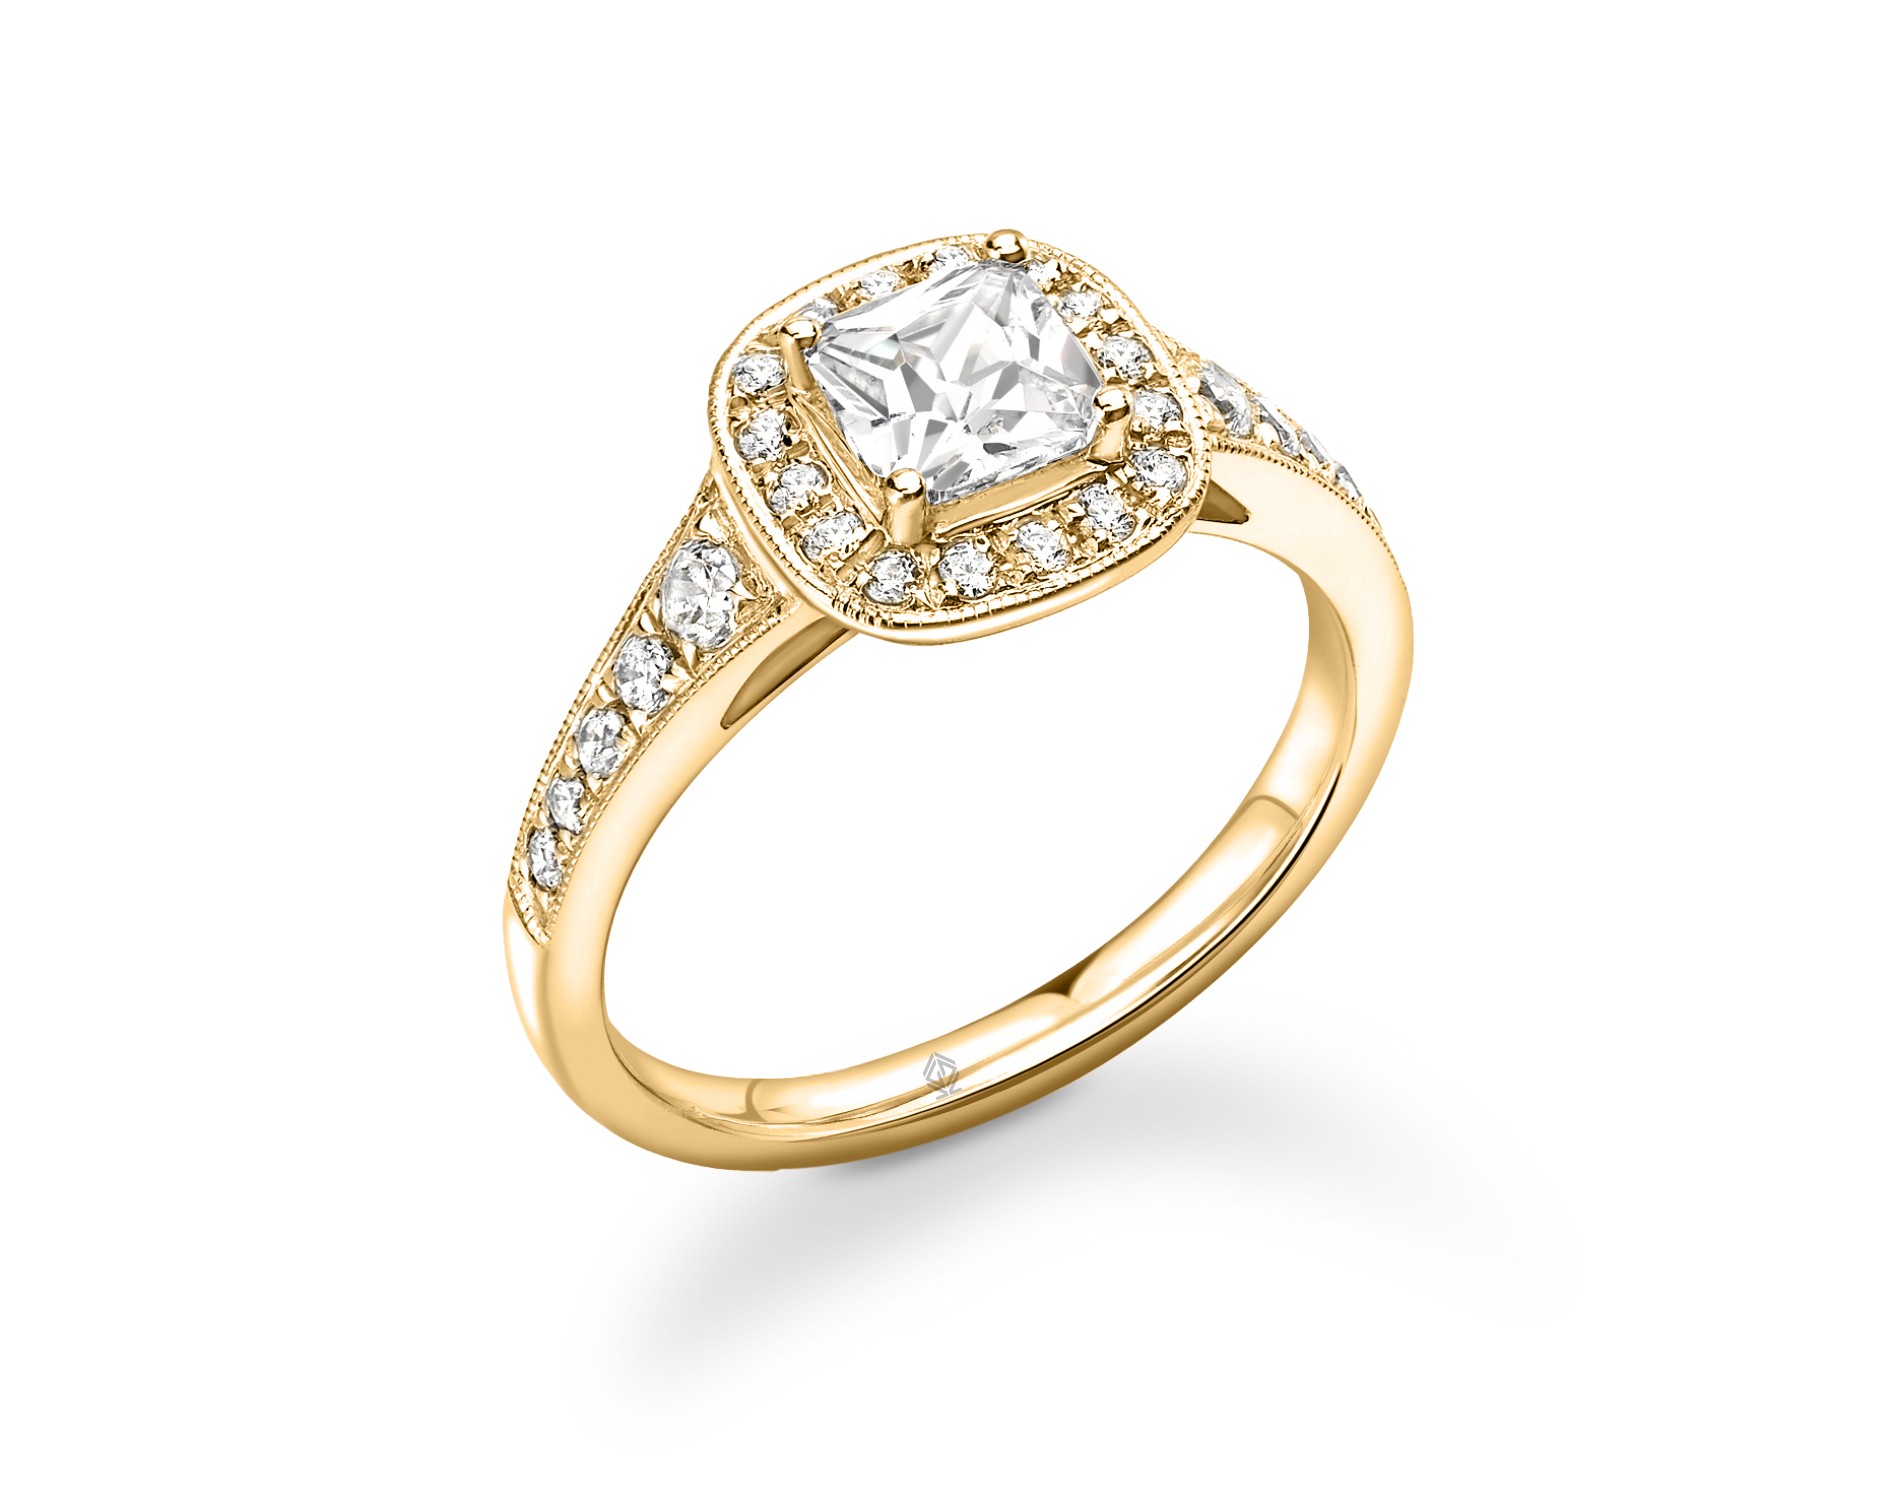 18K YELLOW GOLD VINTAGE MILGRAIN HALO CUSHION CUT DIAMOND RING WITH SIDE DIAMONDS CHANNEL SET